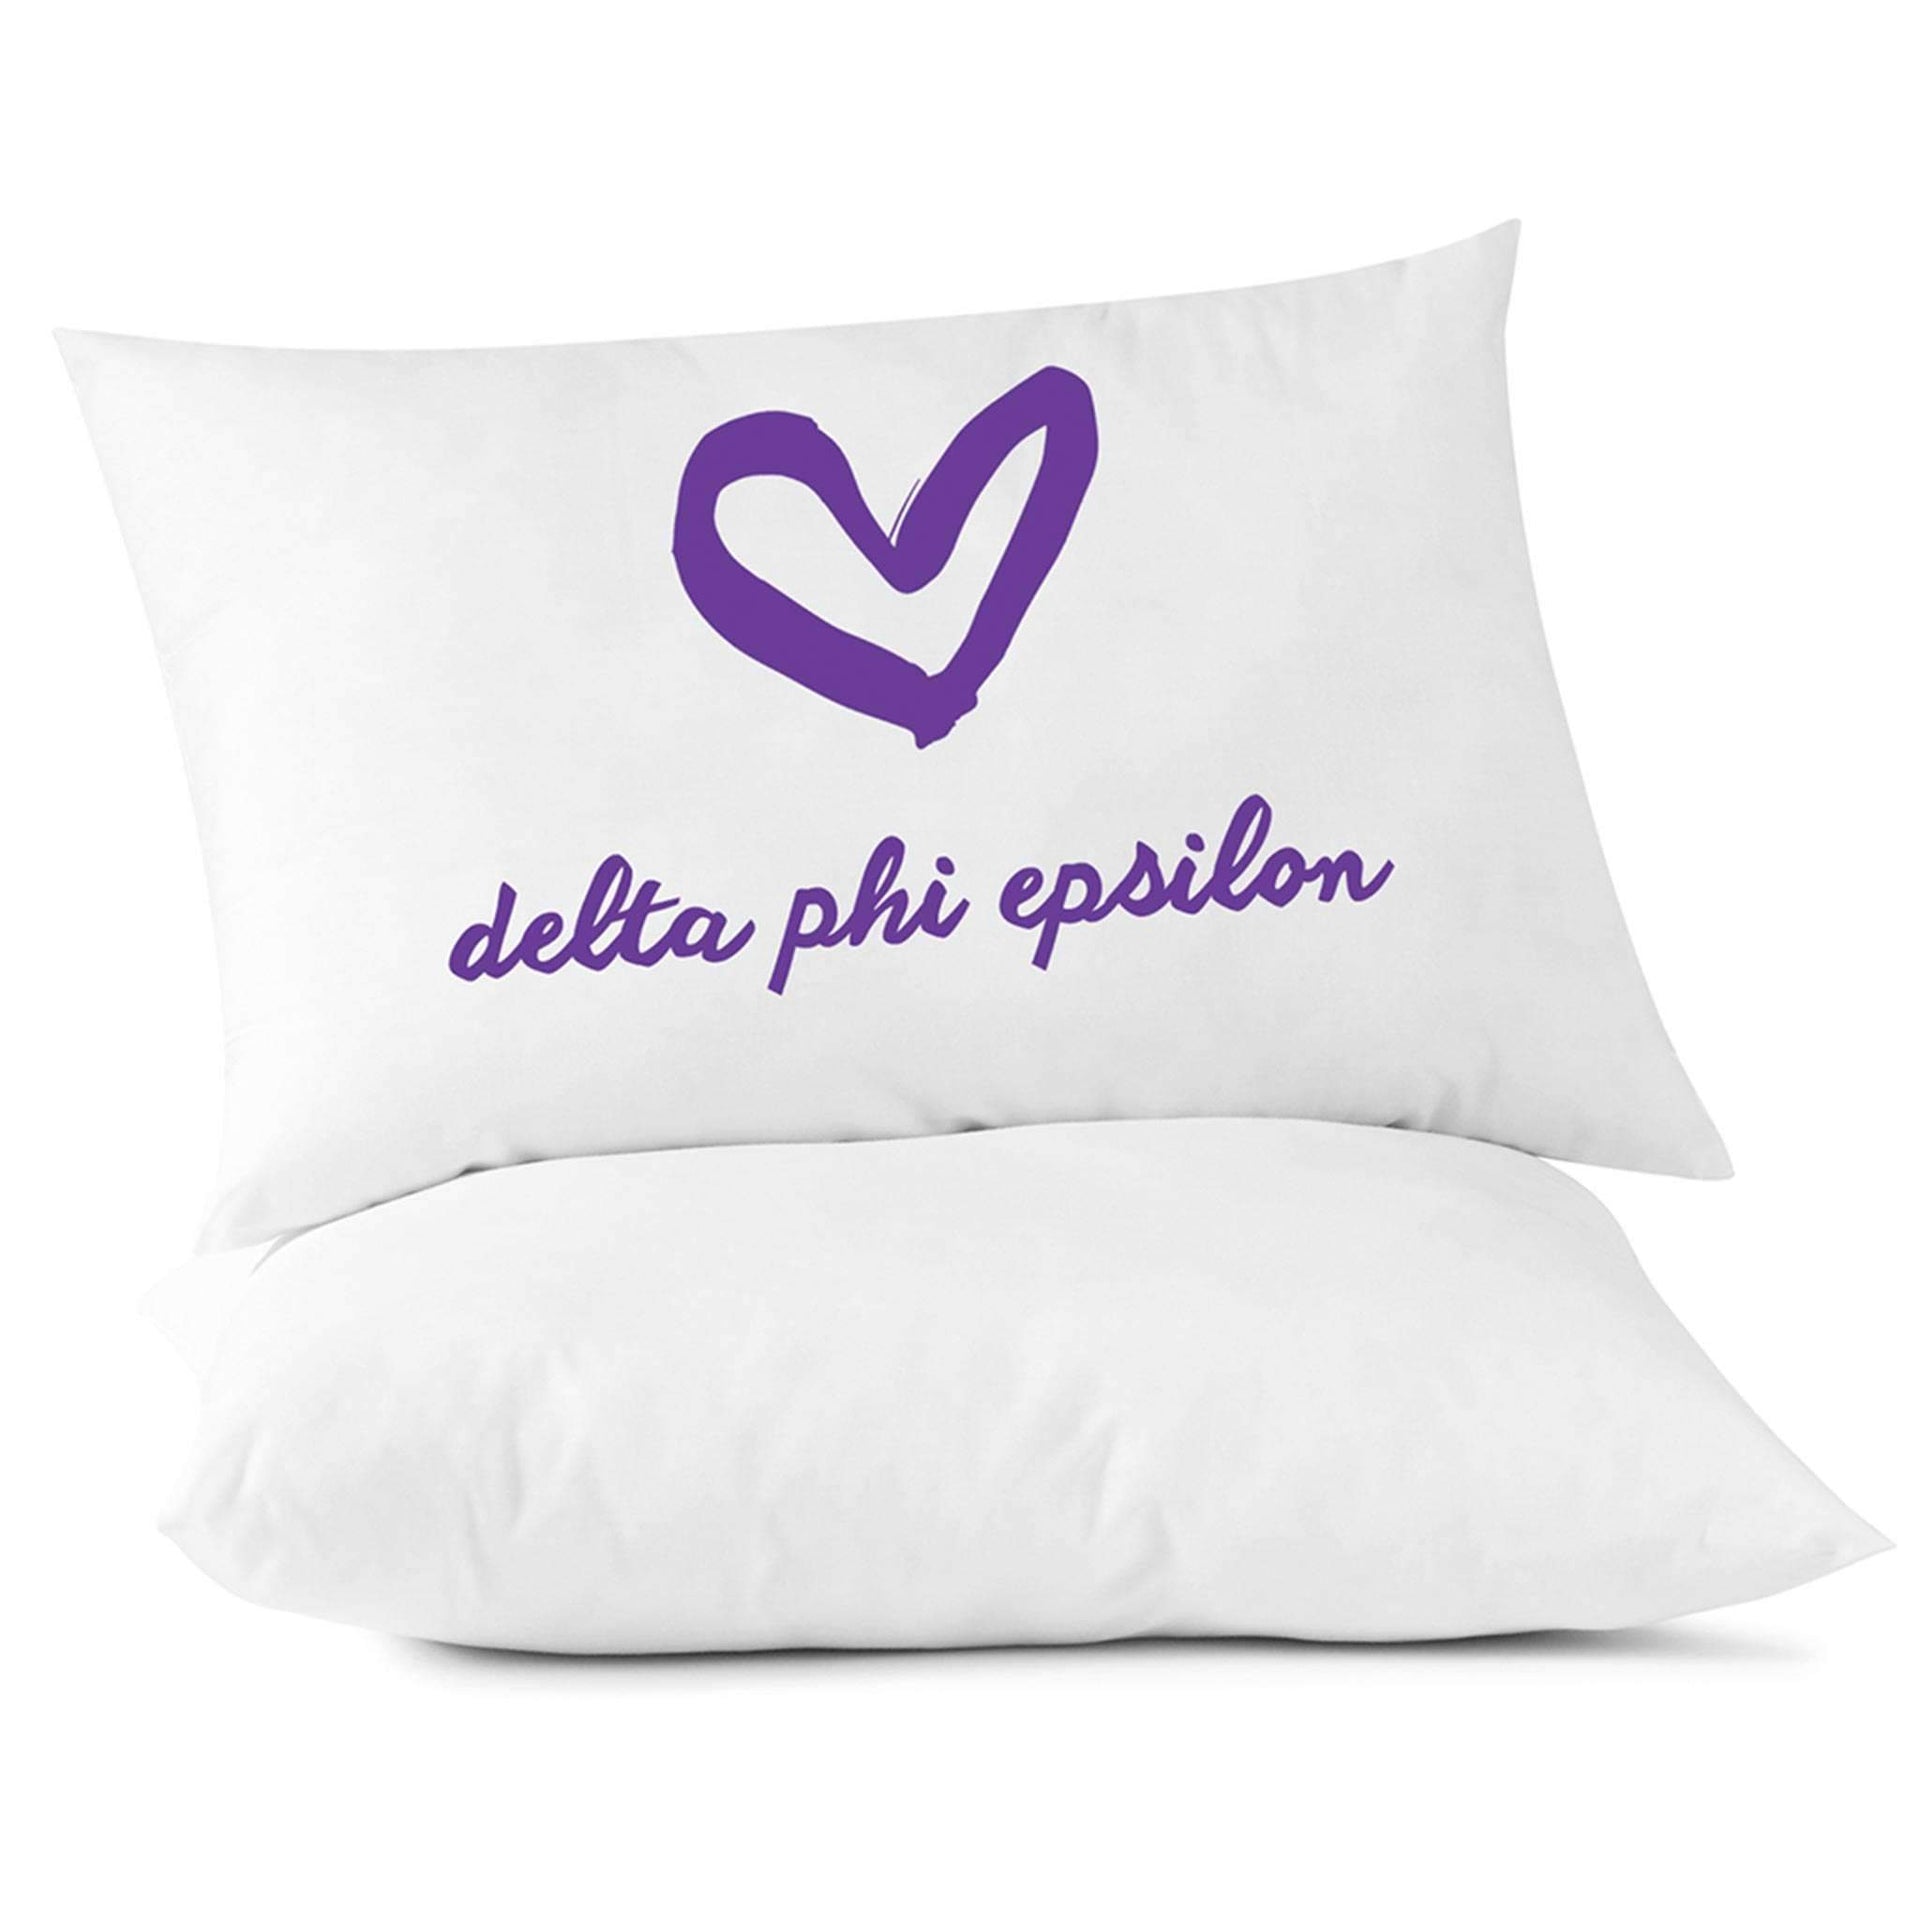 DPE sorority name heart design custom printed on pillowcase.